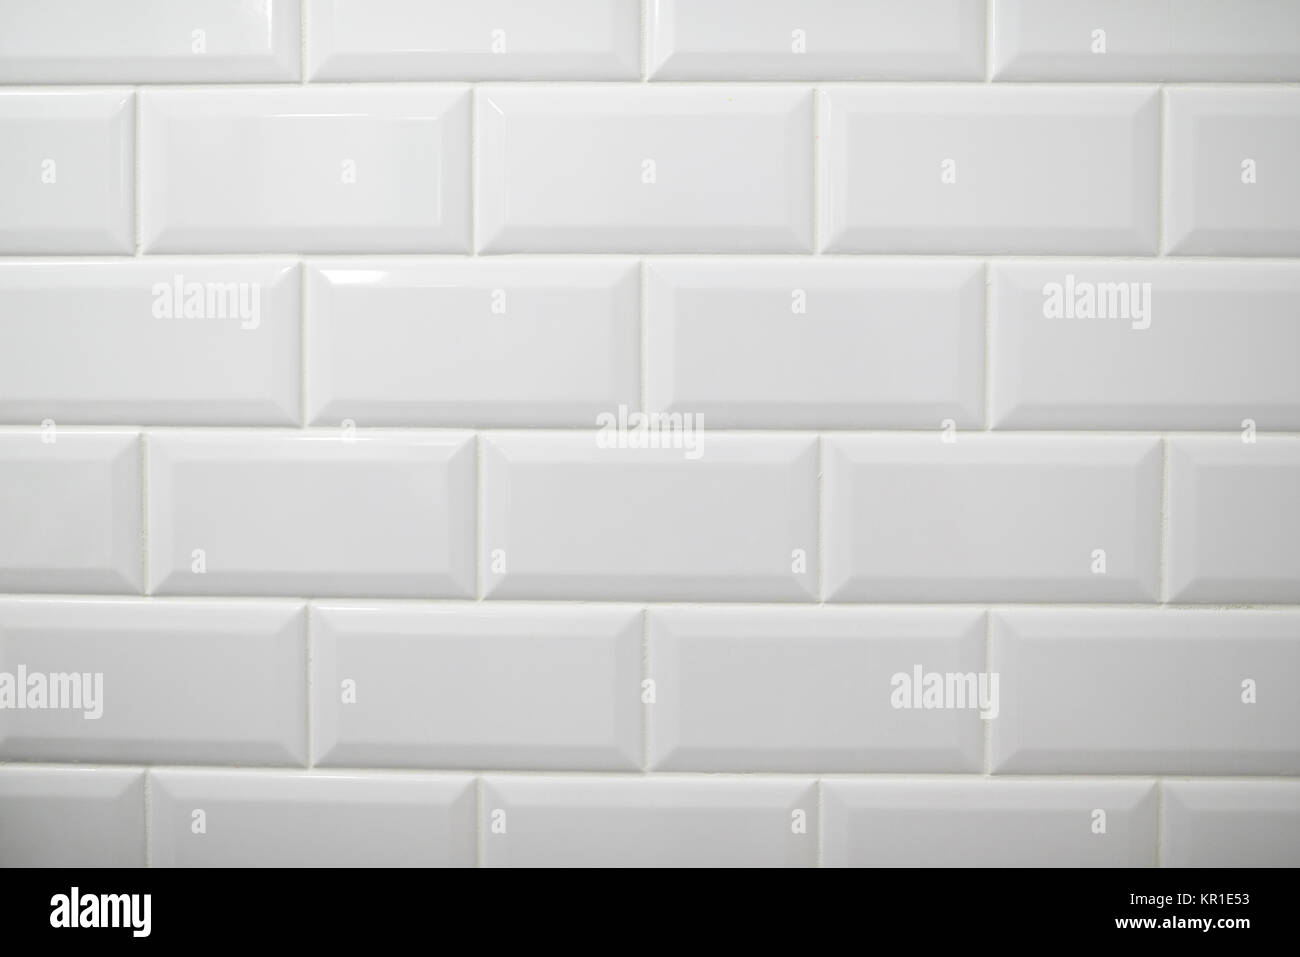 White ceramic tiles background. White brick pattern Stock Photo